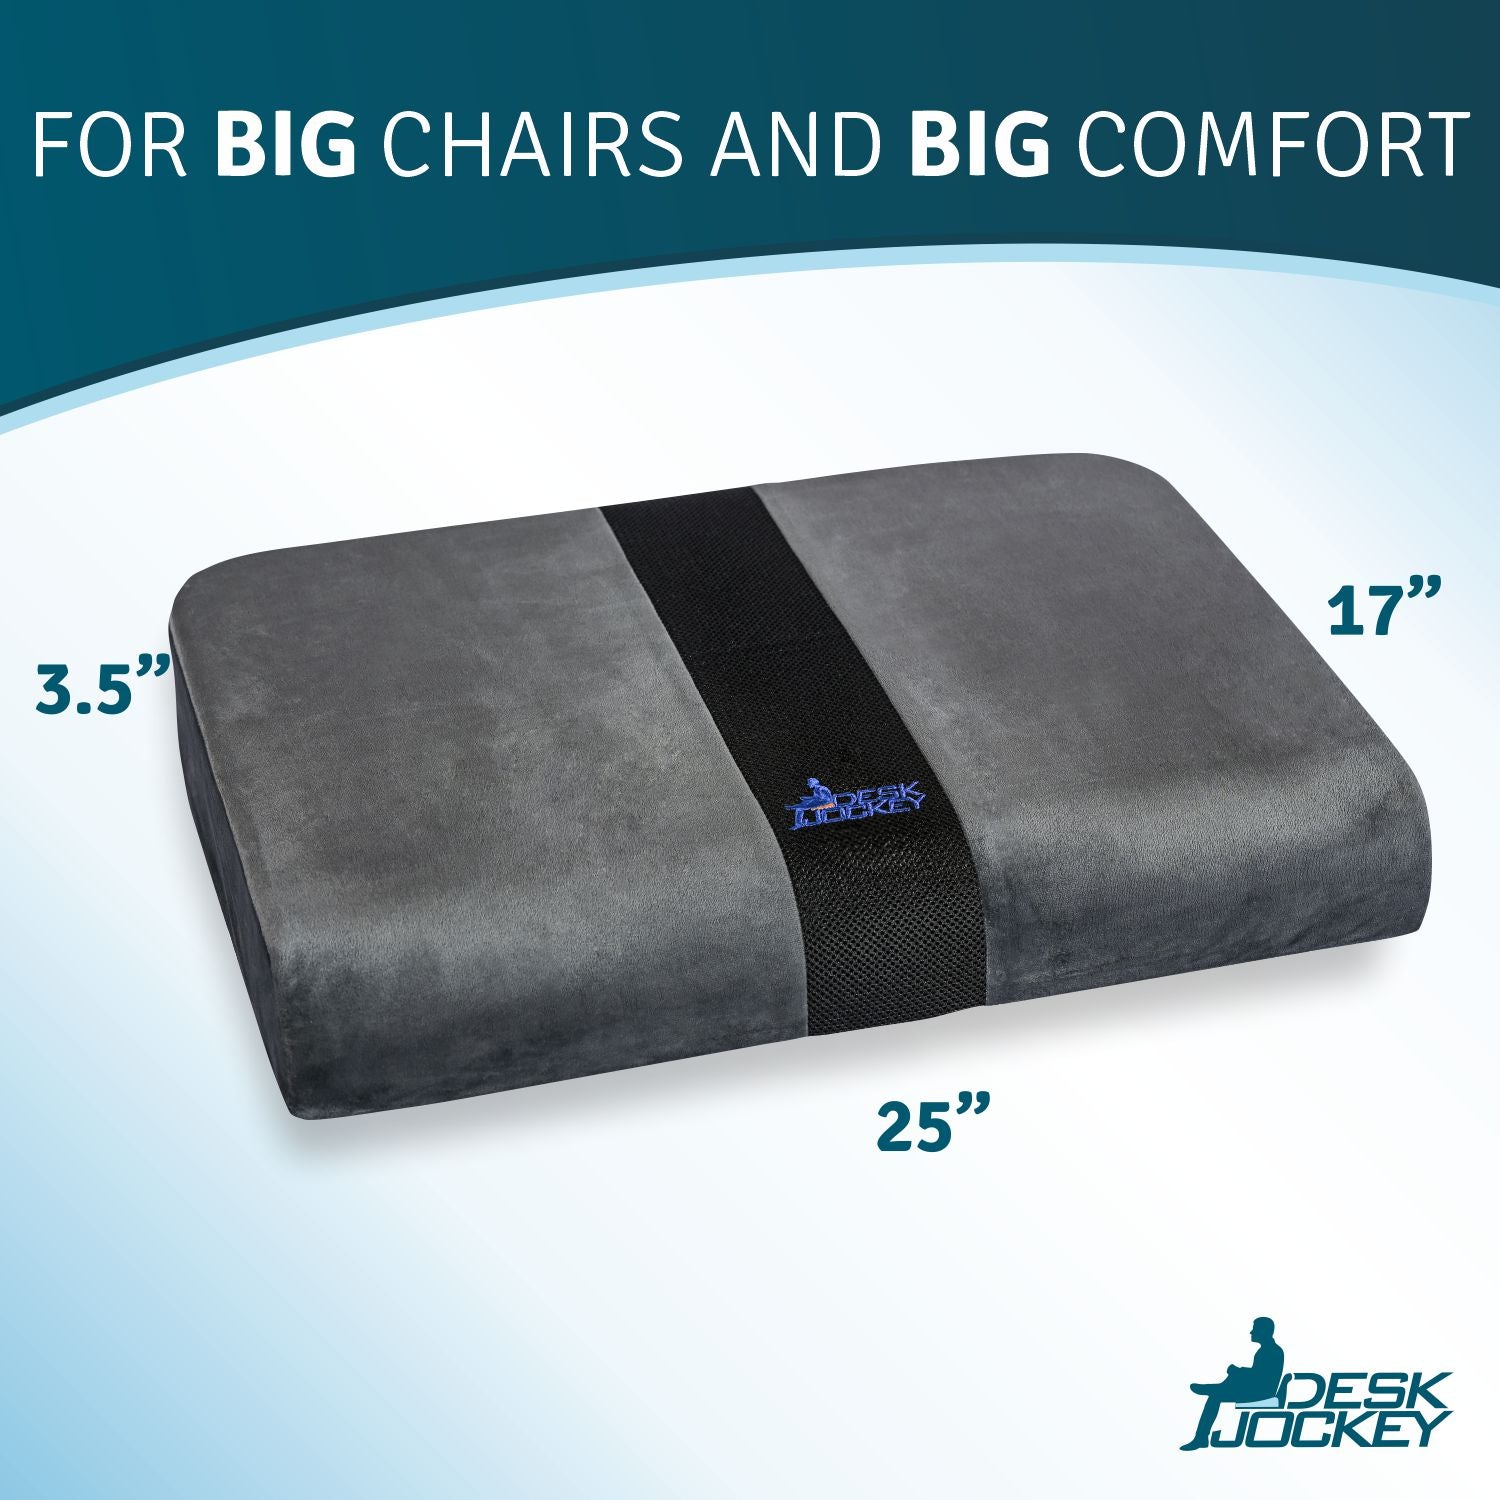 taiwan designer cushion coccyx comfort breathable